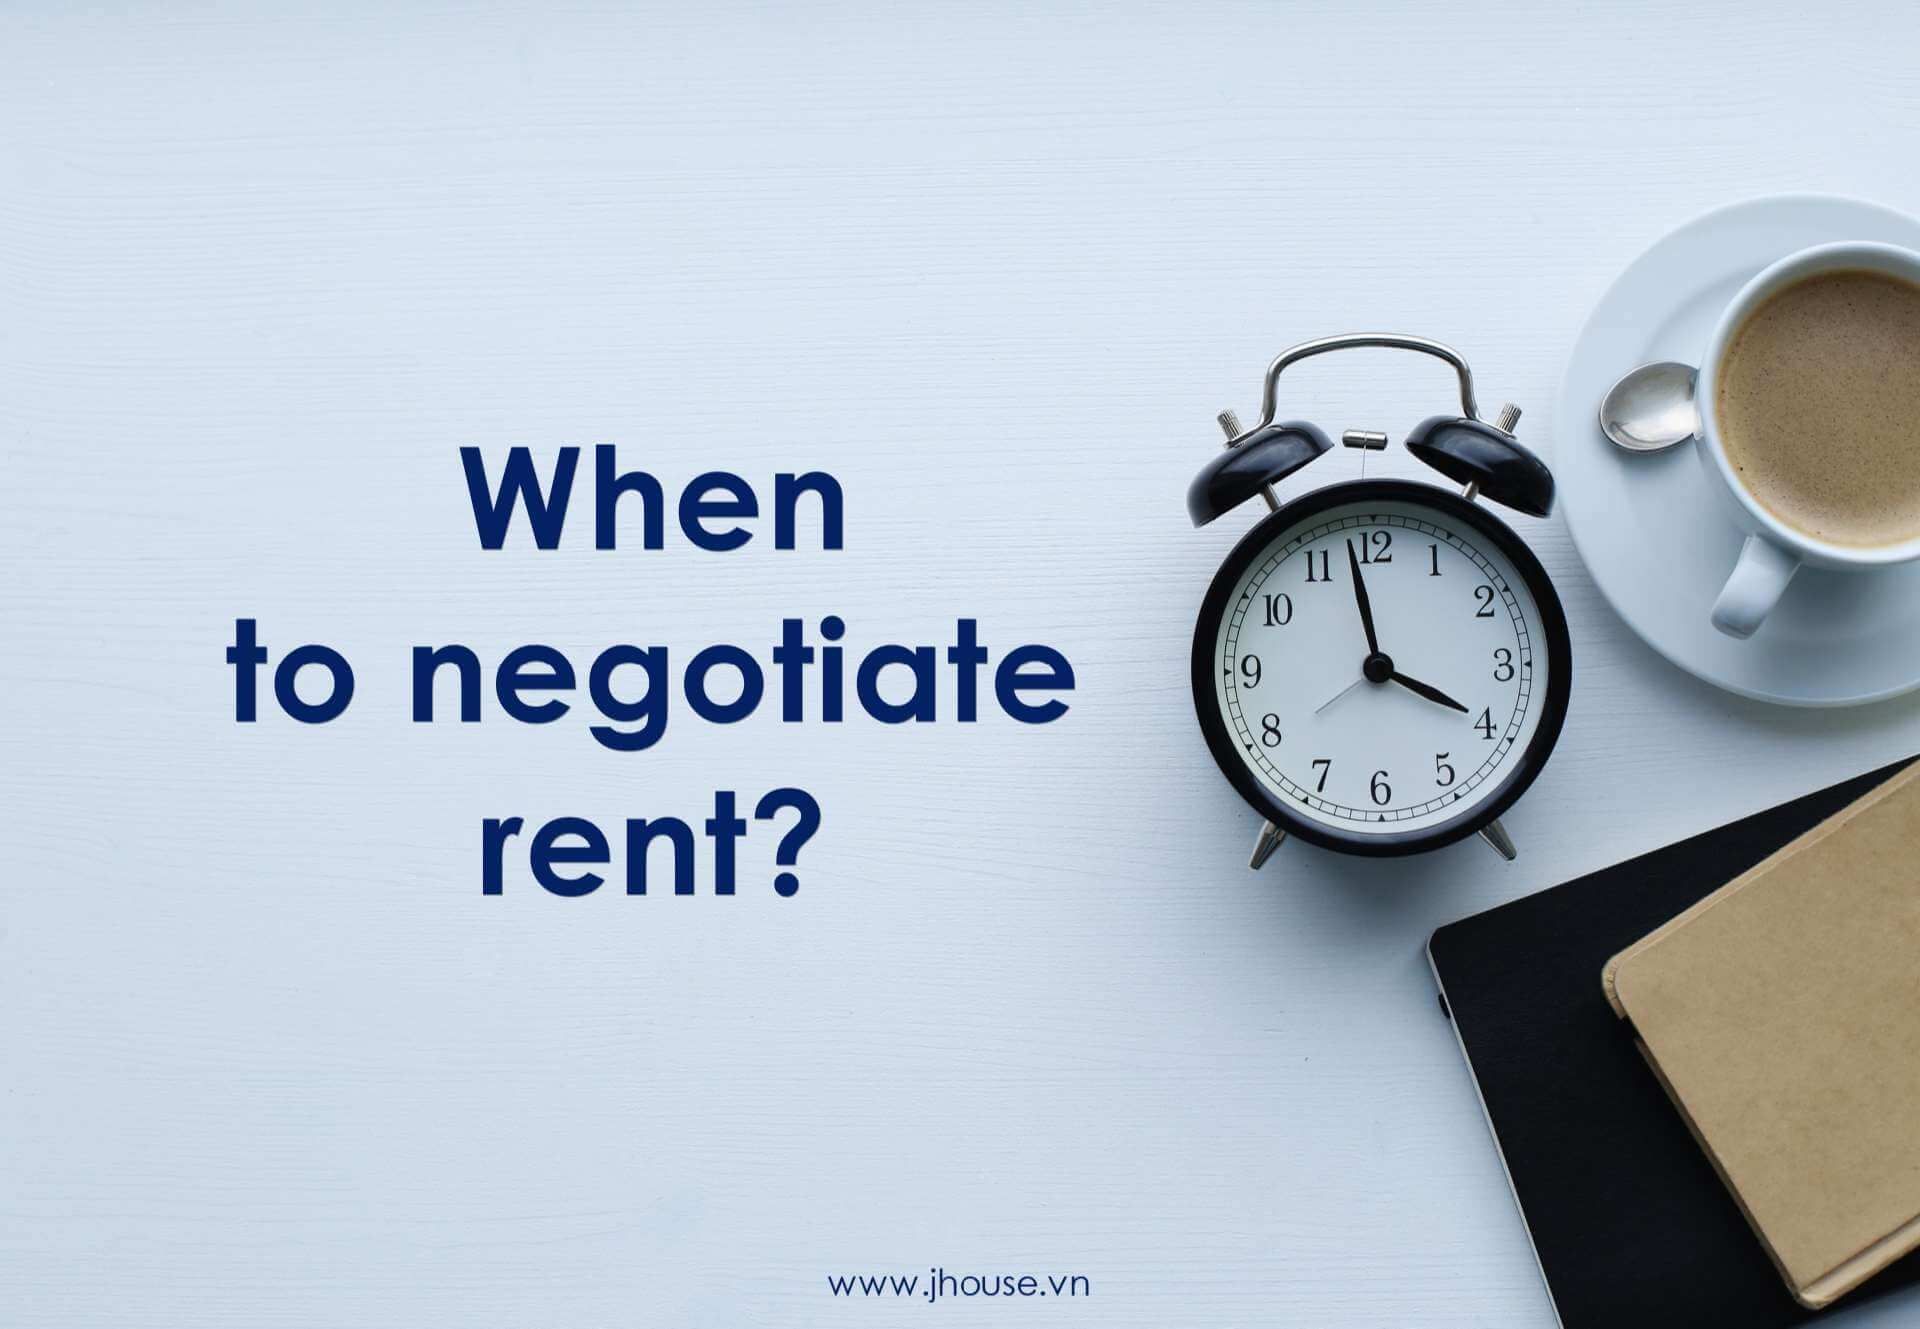 When to negotiate rent